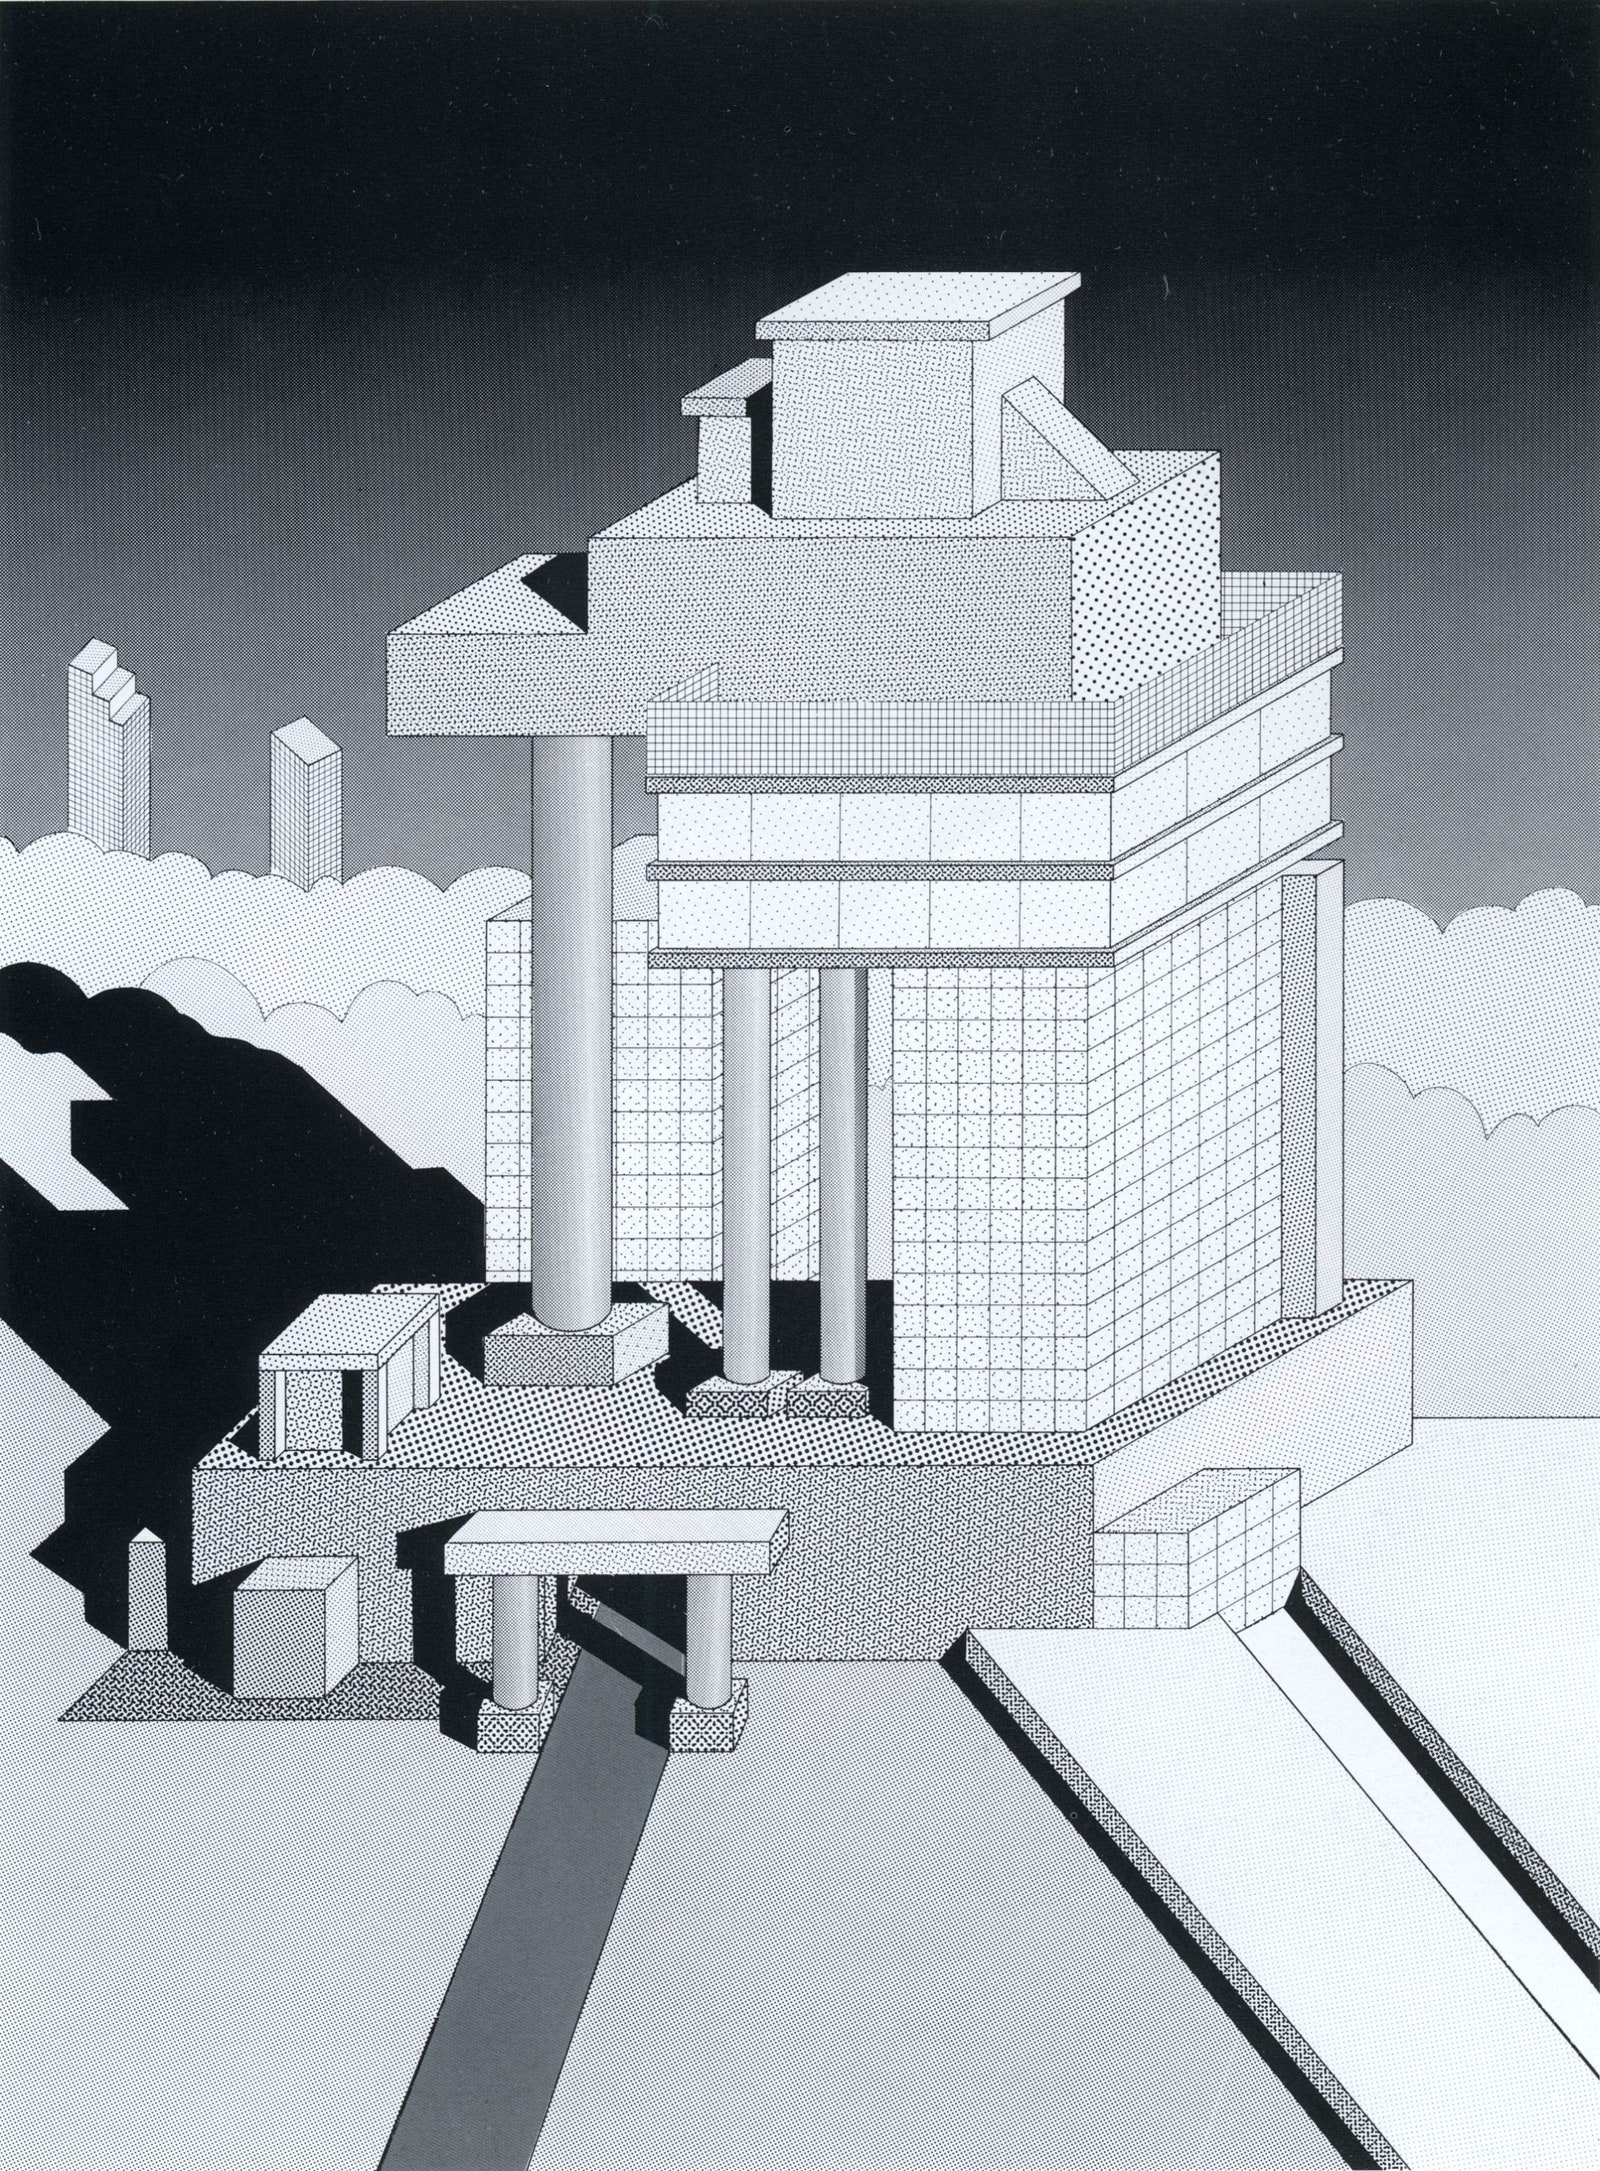 Ettore Sottsass architectural design sketch 1983 © VG BildKunst Bonn 2021